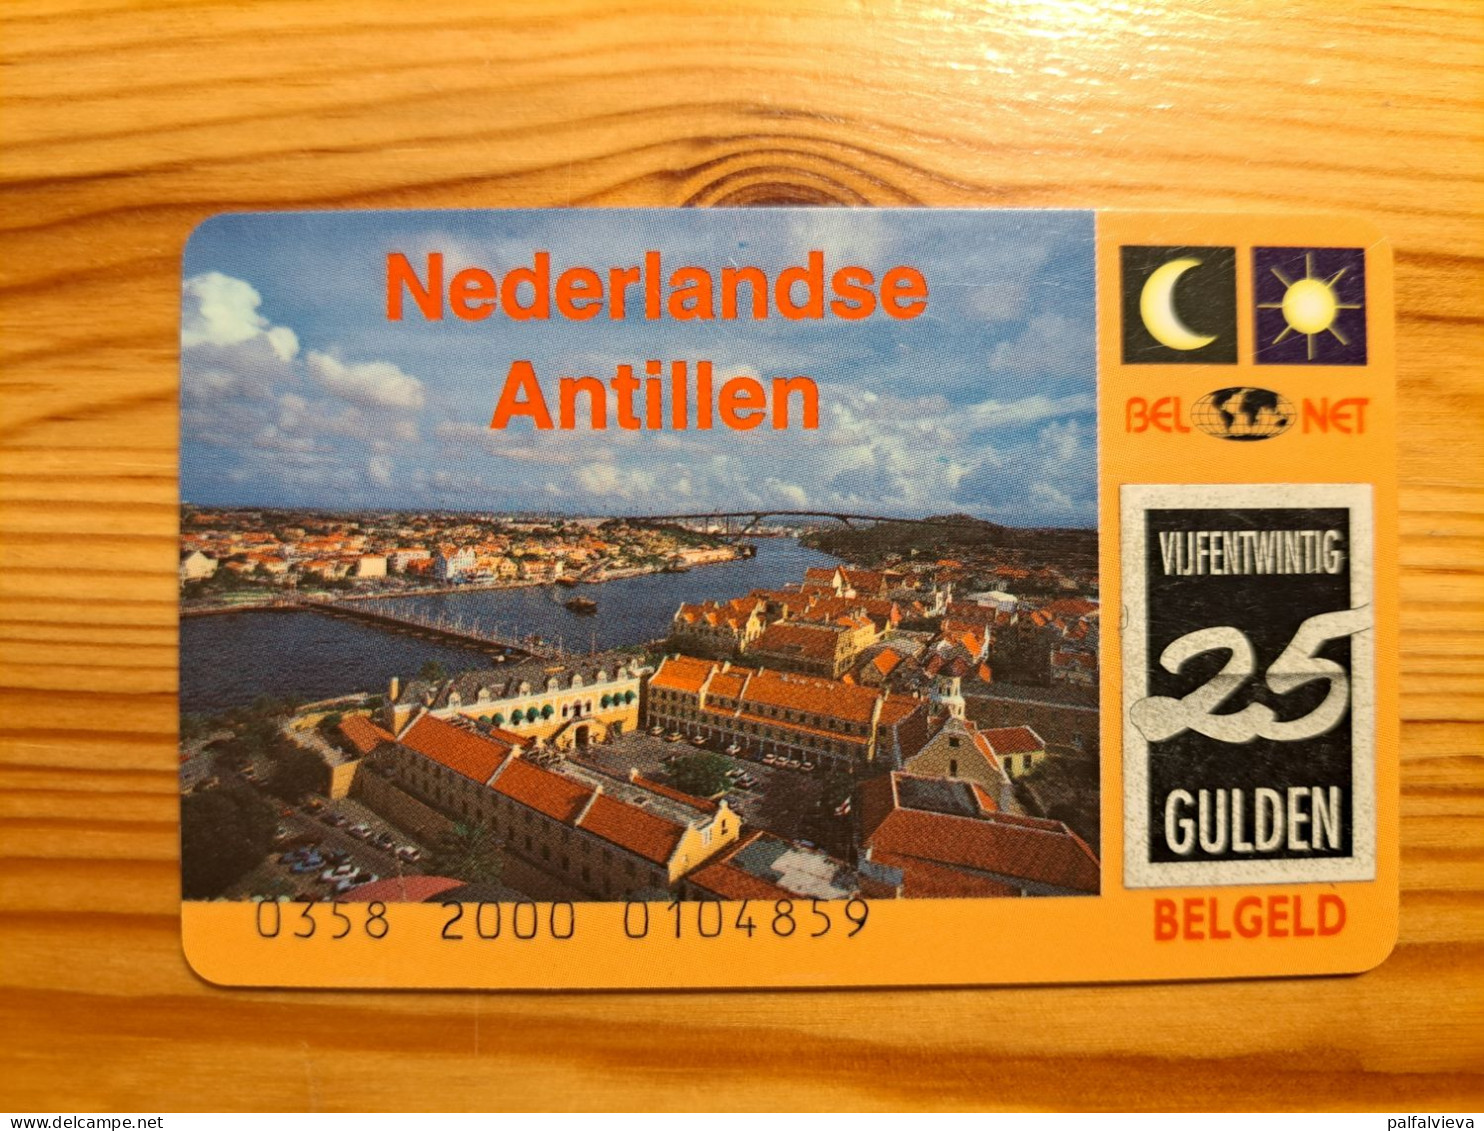 Prepaid Phonecard Netherlands, BelNet - Netherlands Antillen - [3] Sim Cards, Prepaid & Refills